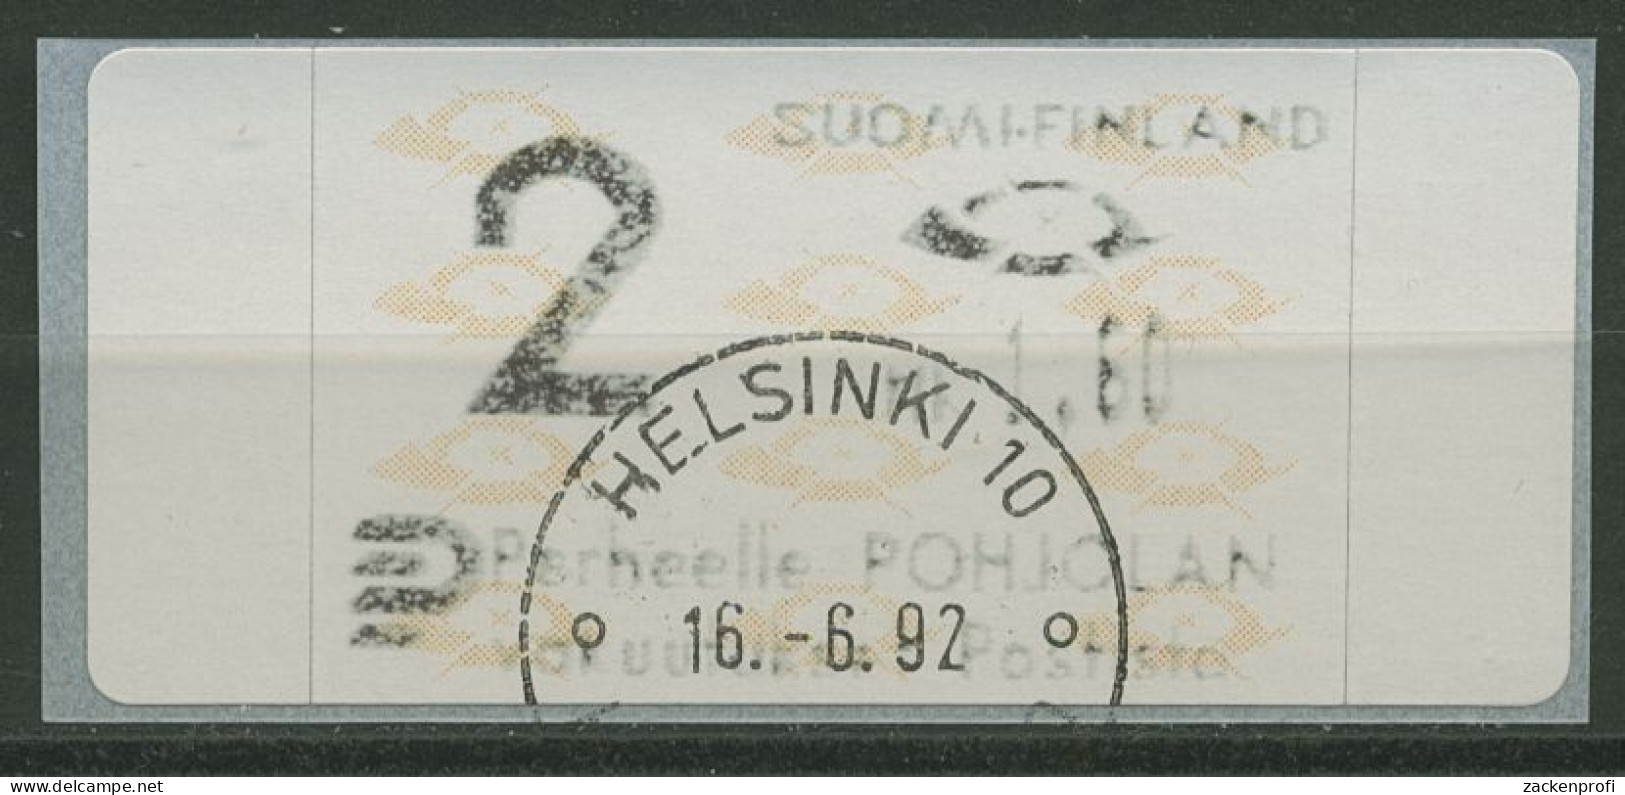 Finnland Automatenmarken 1992 Posthörner Einzelwert ATM 12.3 Z2 Gestempelt - Viñetas De Franqueo [ATM]